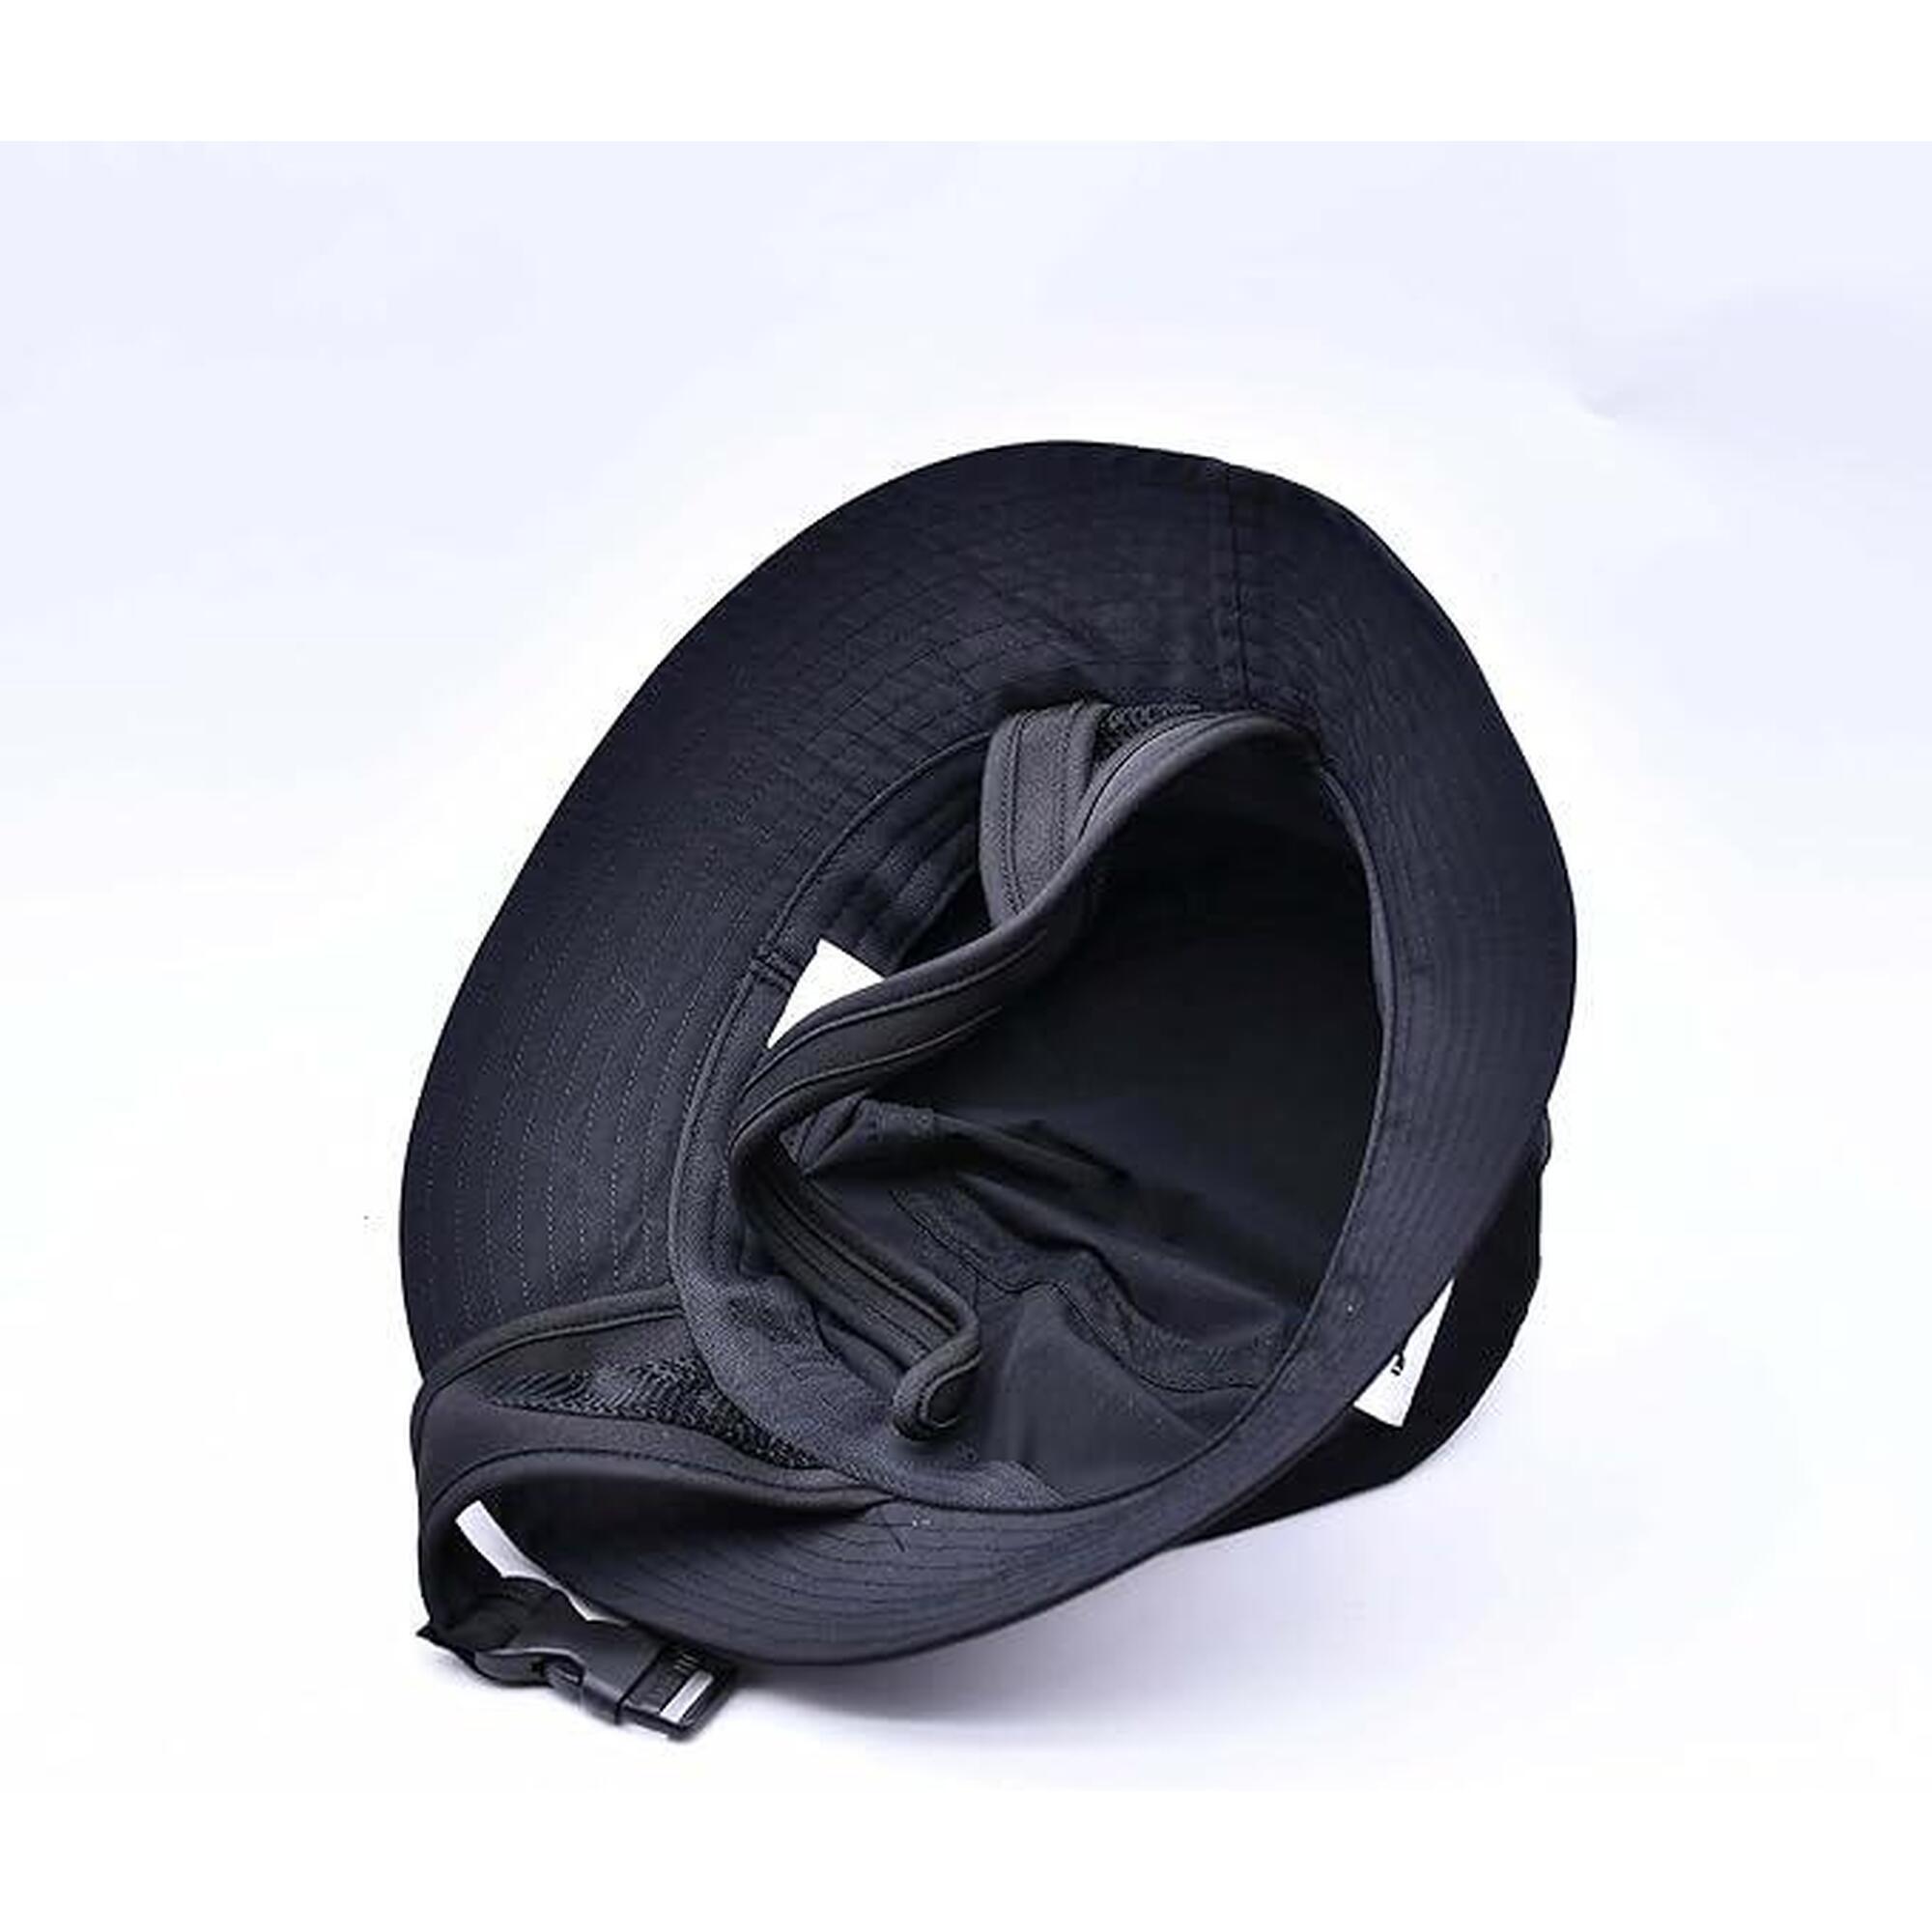 Sombrero de Protección Solar con Visera Flexible - (Negro)